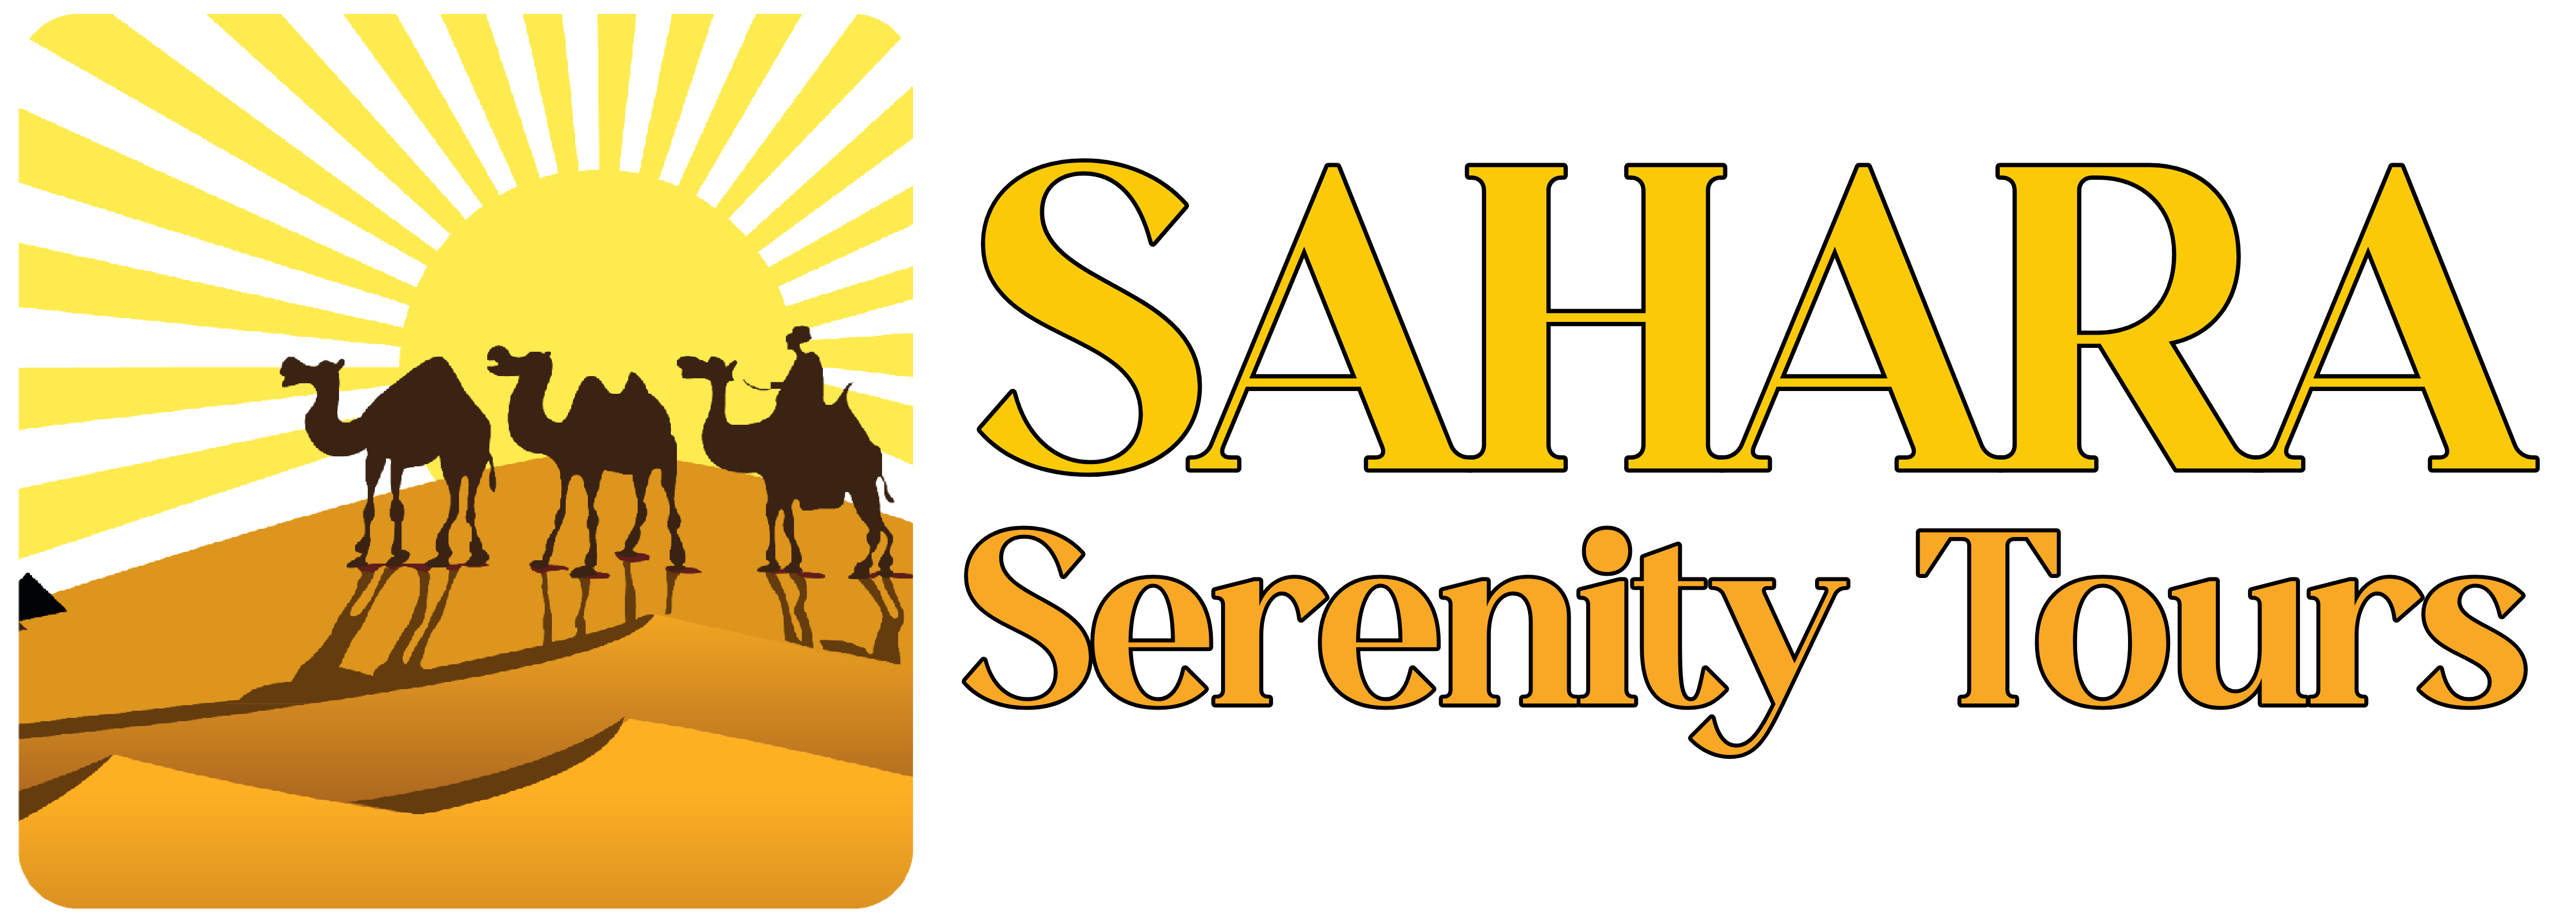 sahara serenity tours logo